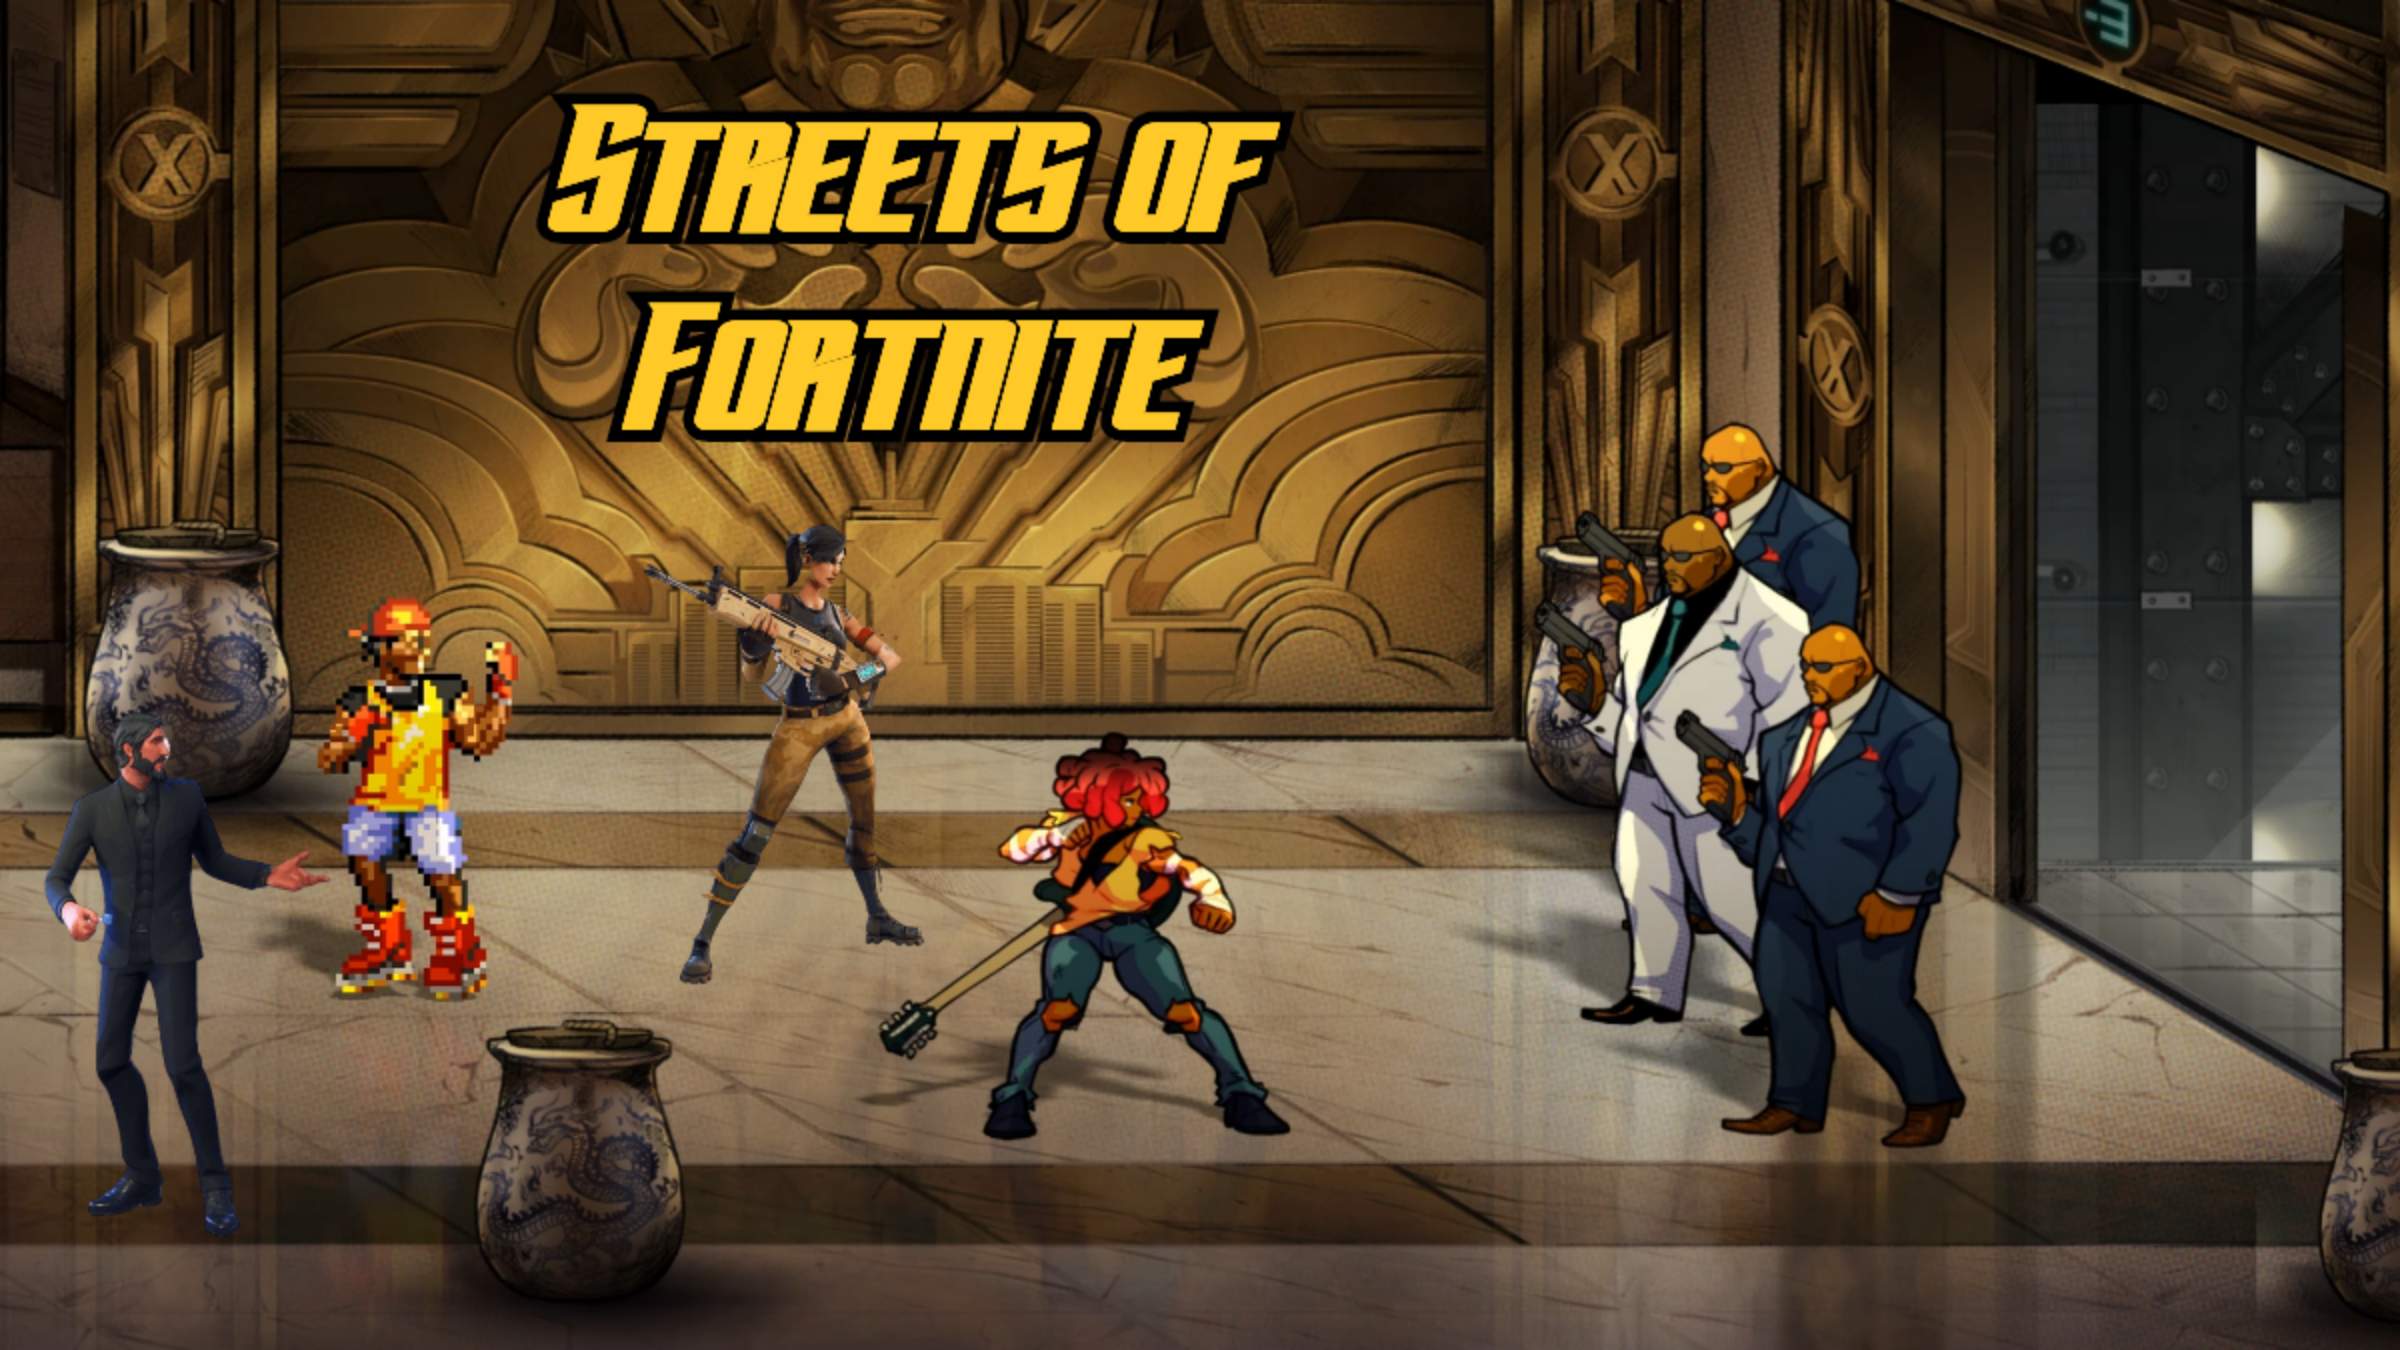 Squads Streets of Fortnite